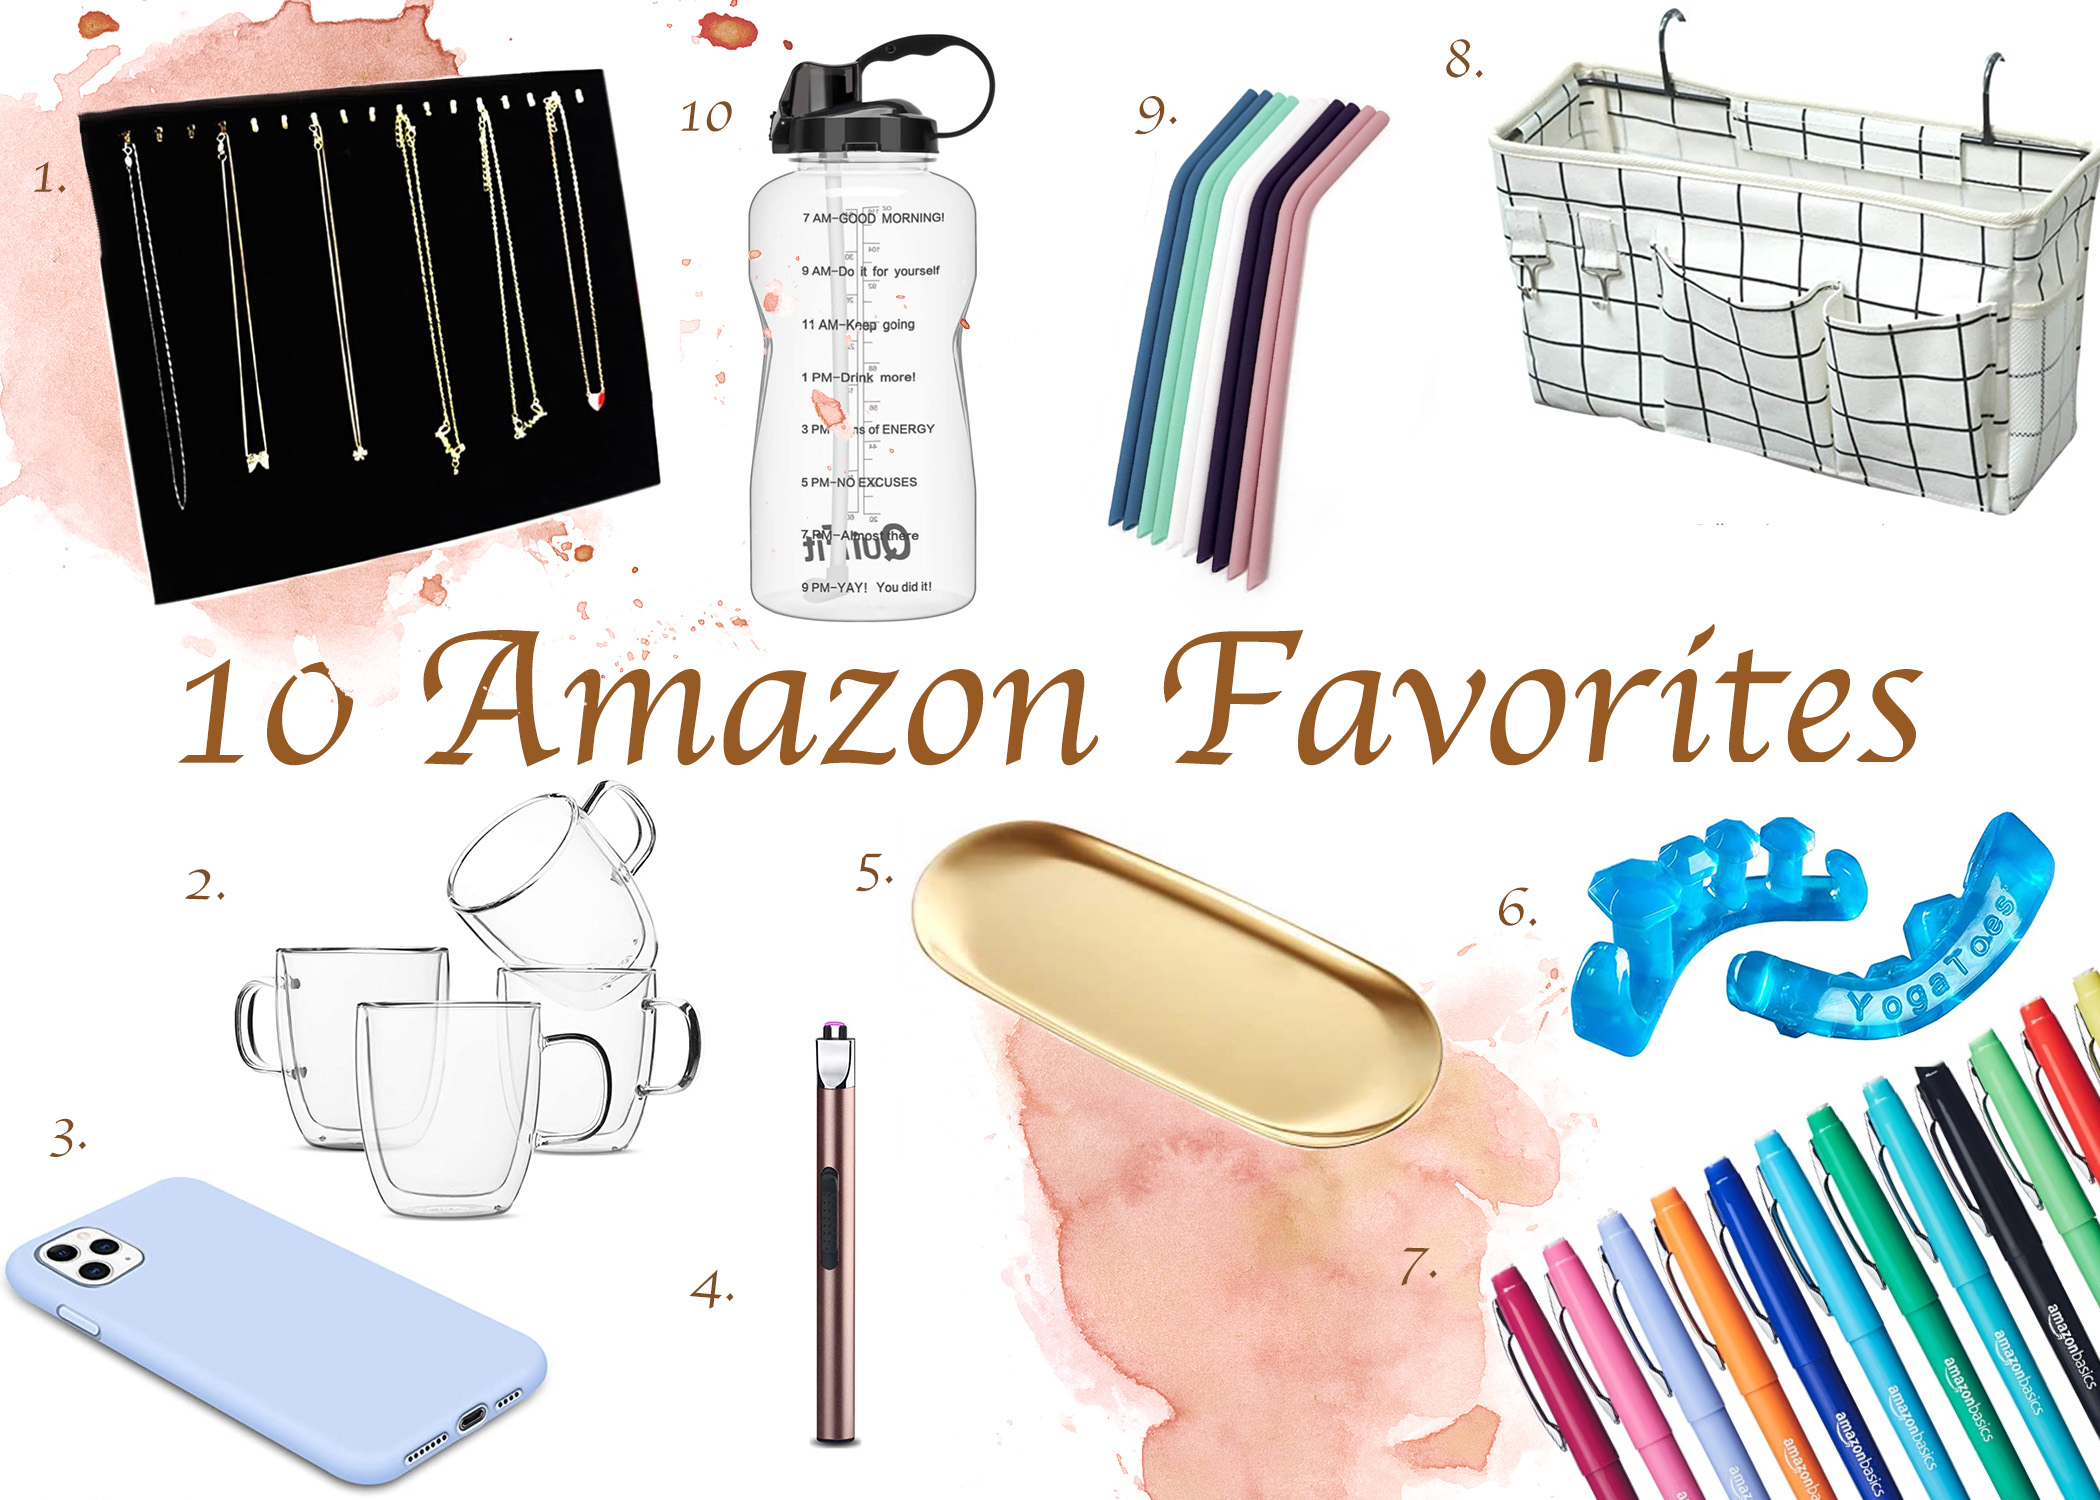 10 Amazon Favorites